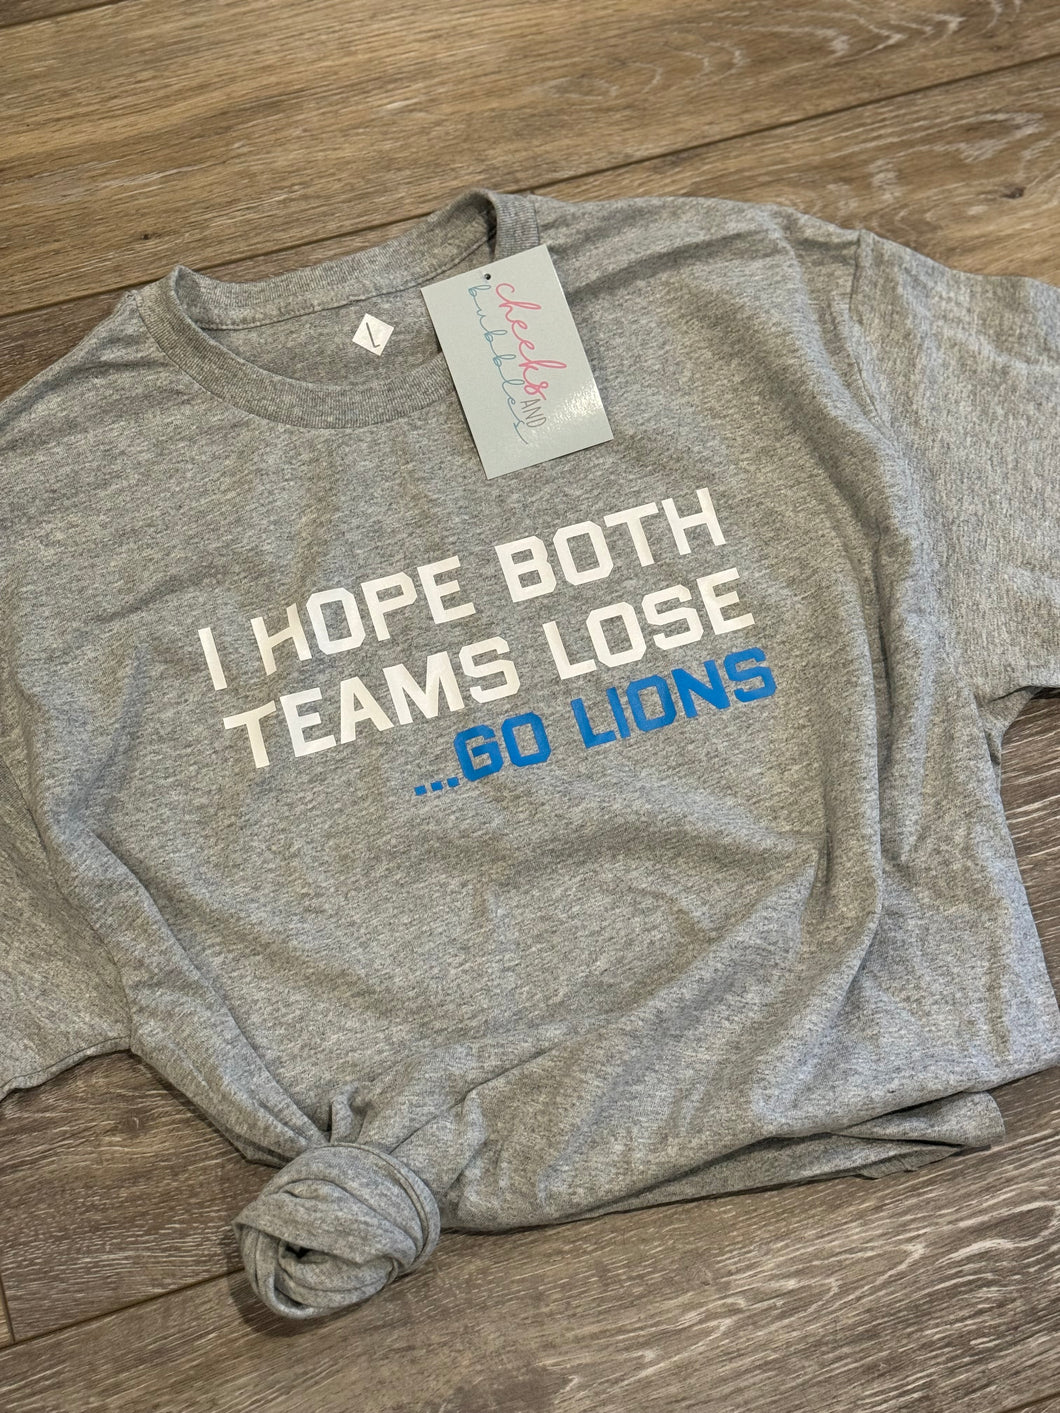 I Hope Both Teams Lose...Go Lions Short Sleeve T-shirt